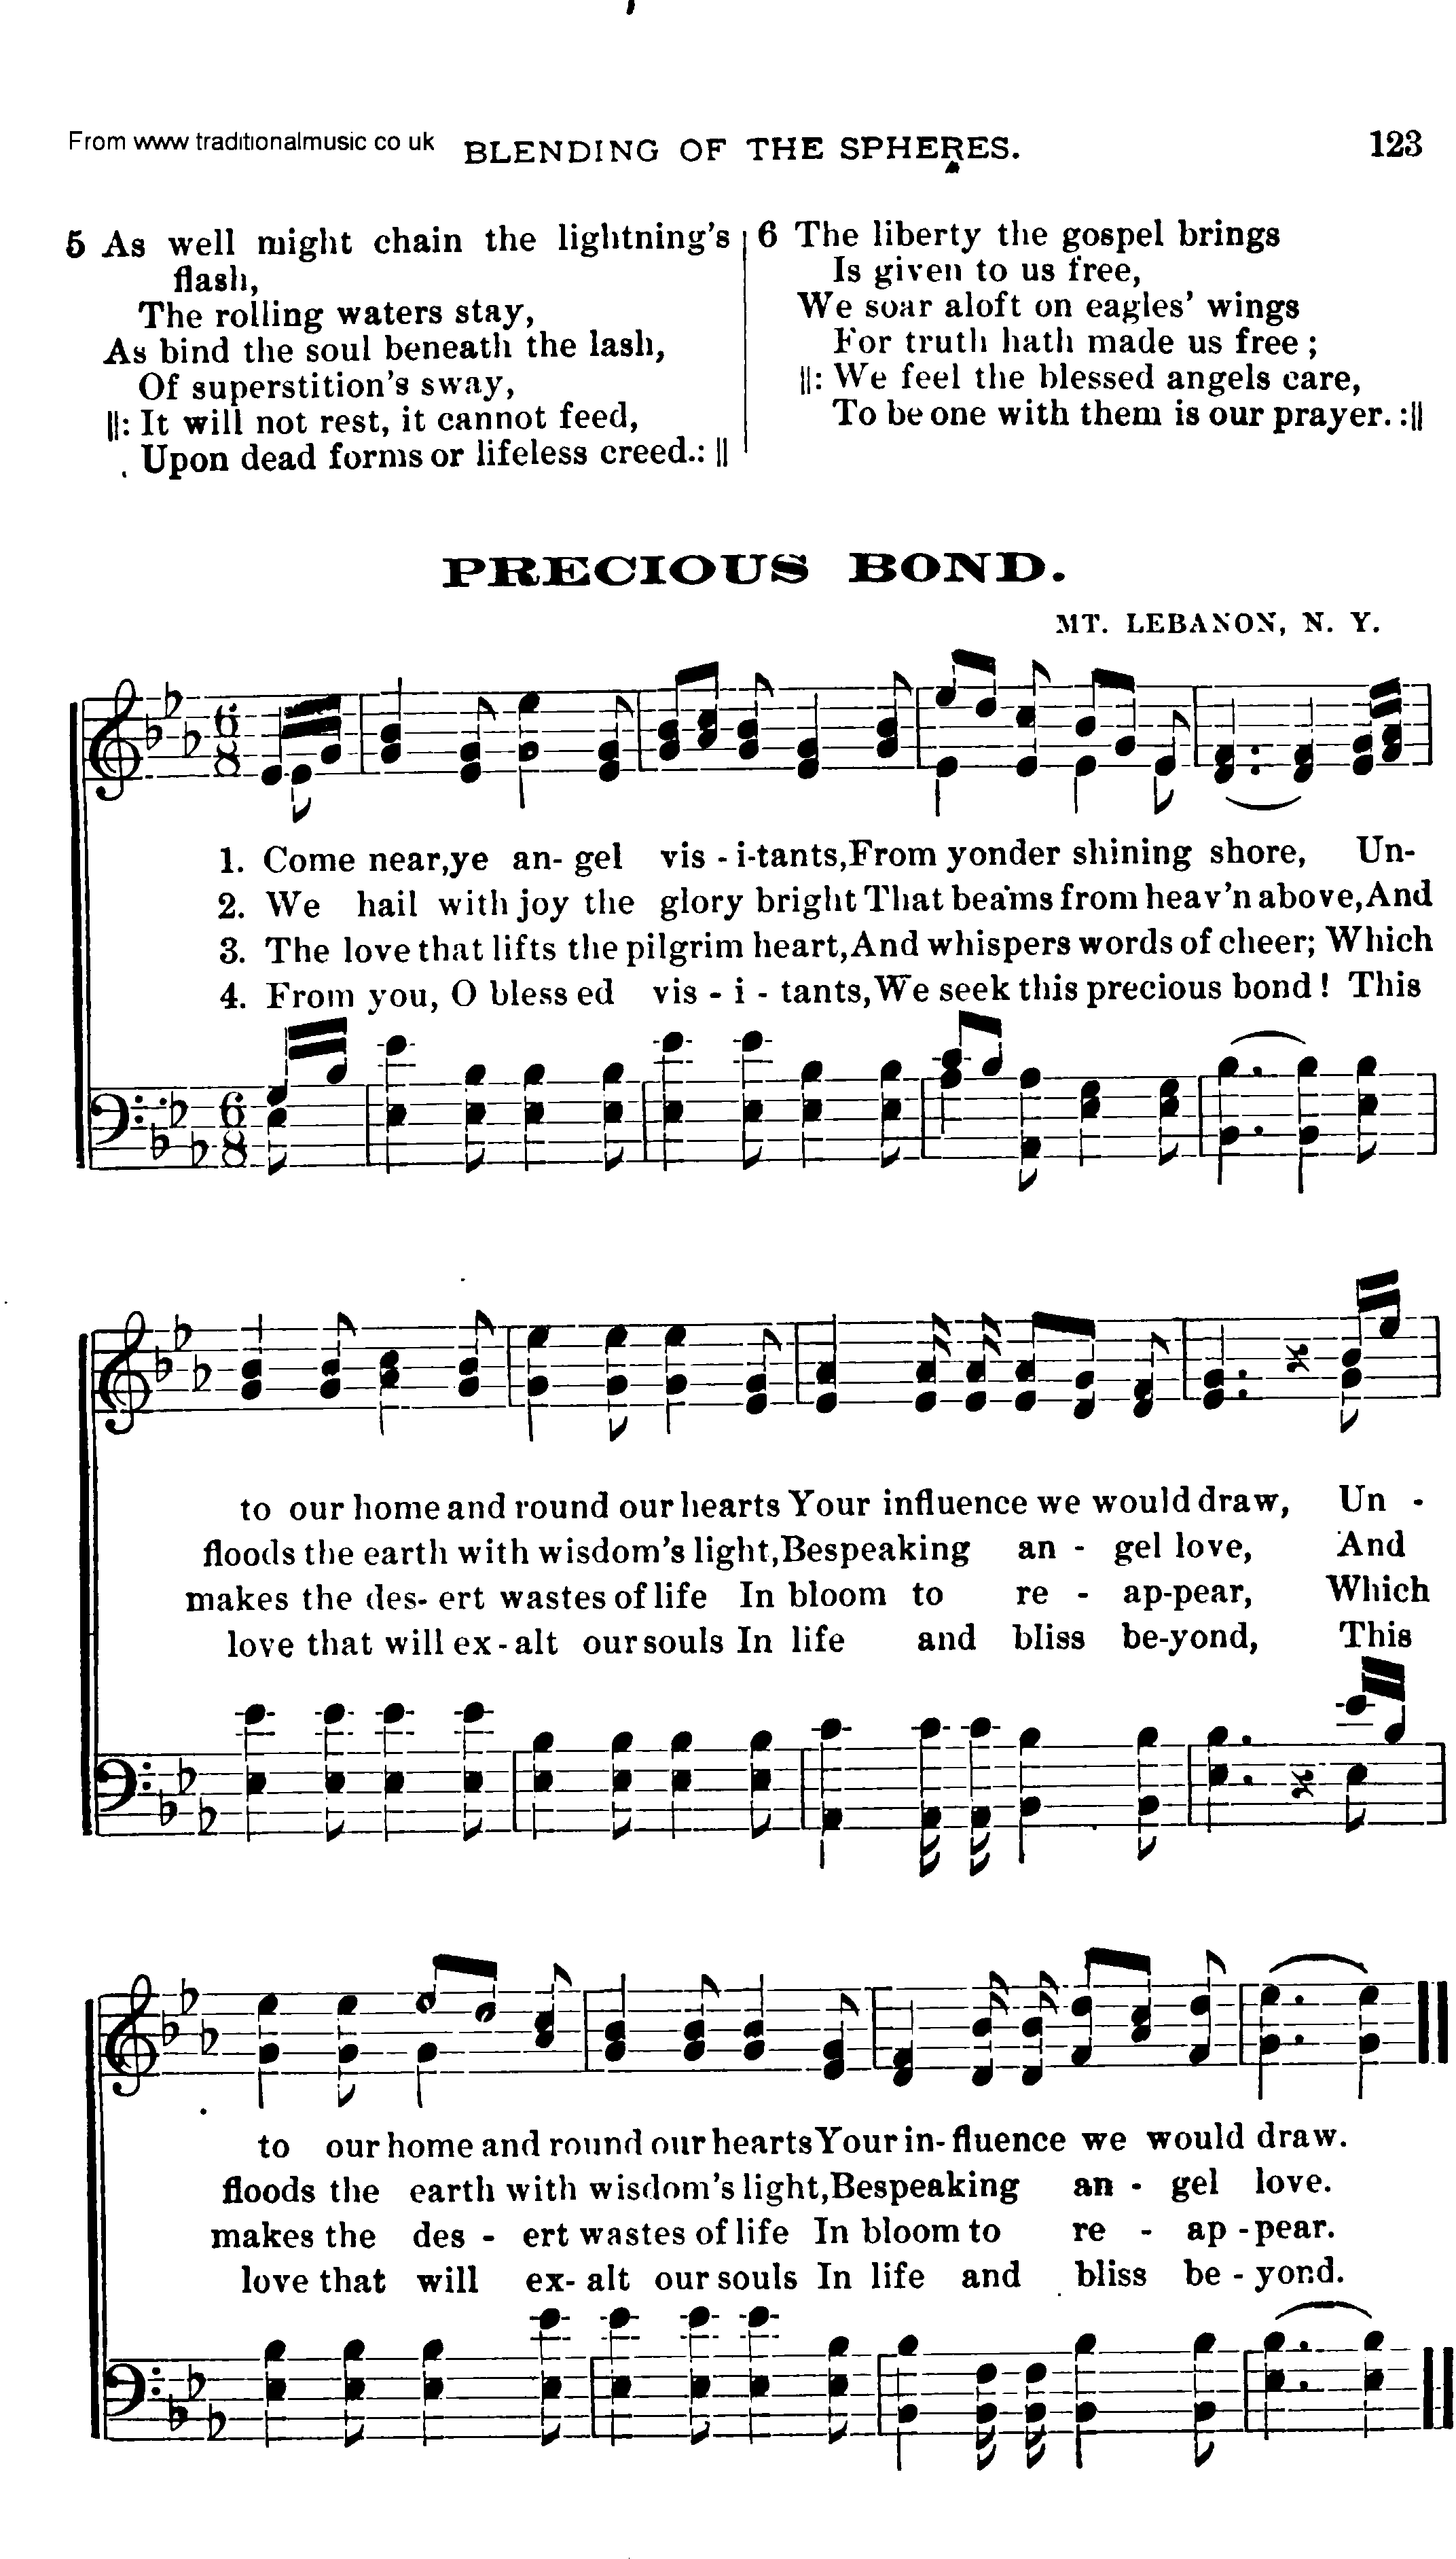 Shaker Music collection, Hymn: Precious Bond, sheetmusic and PDF